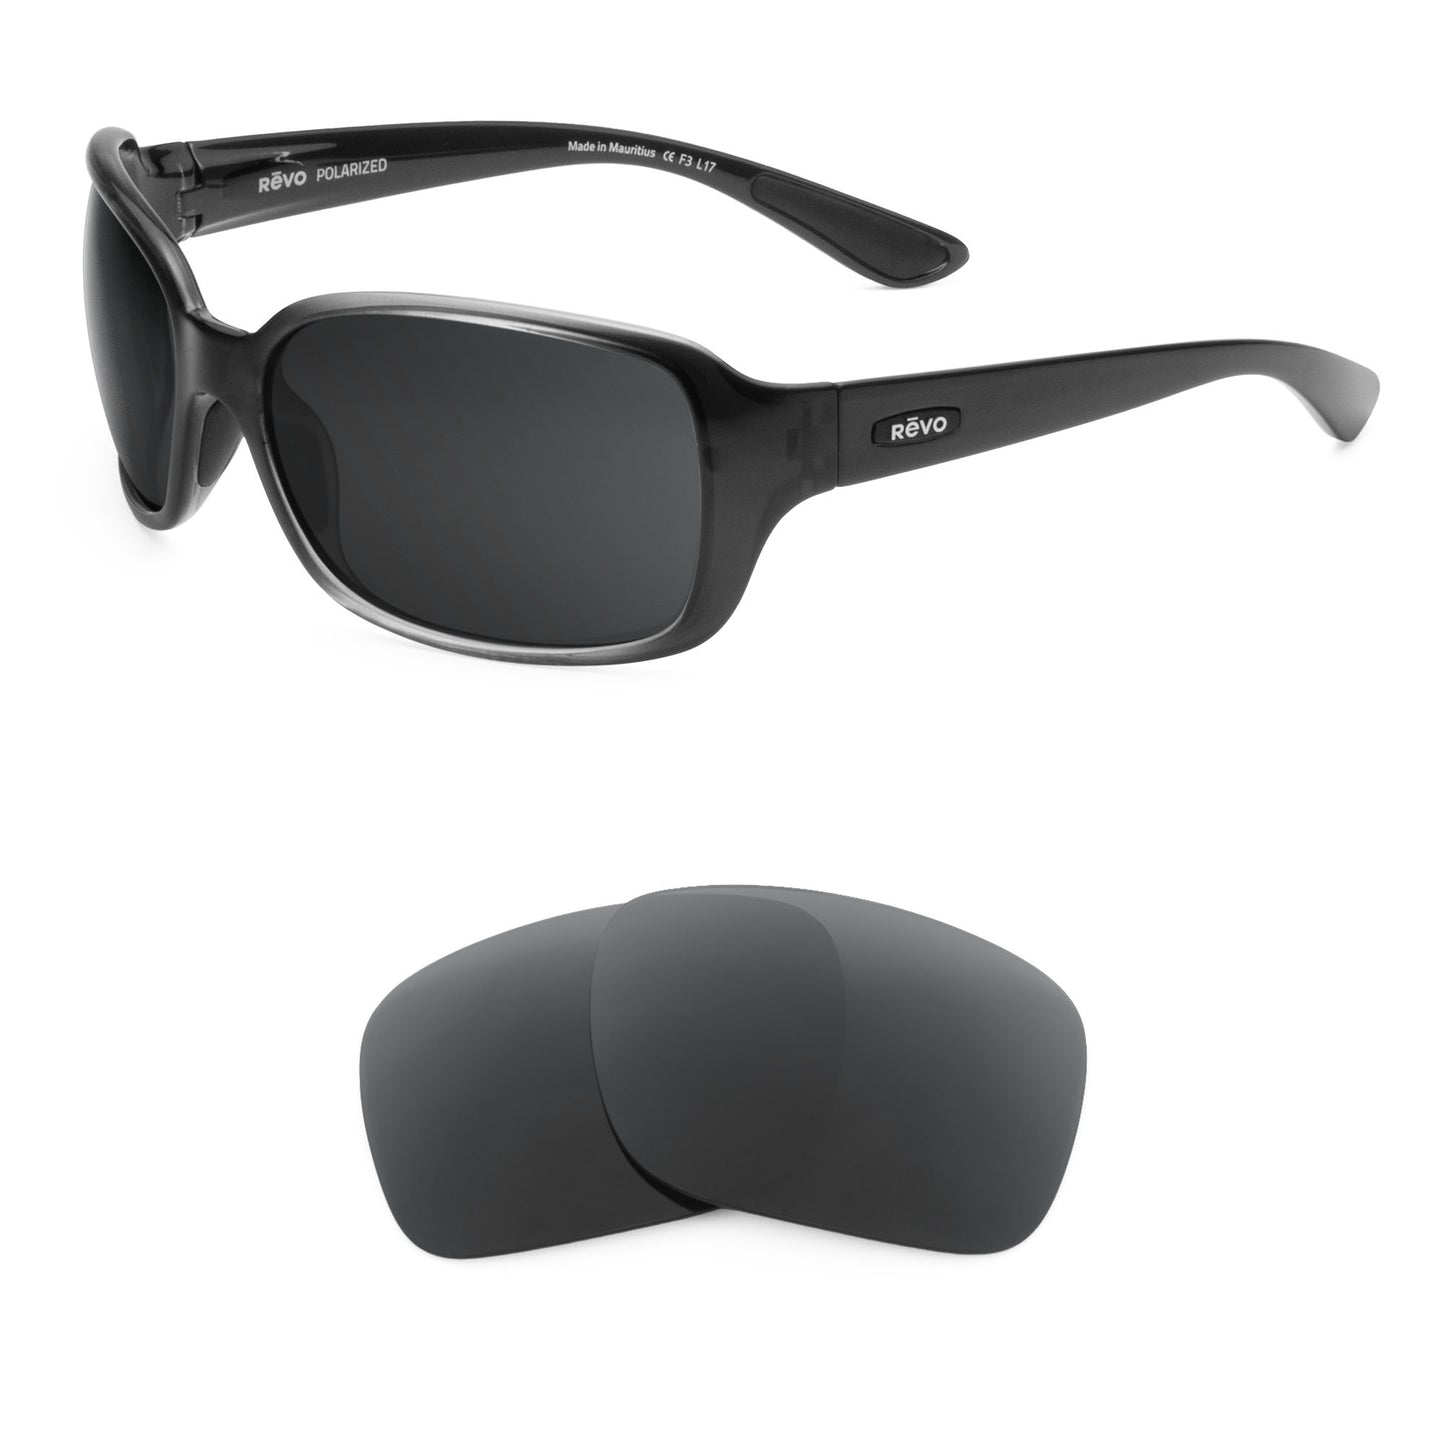 Revo Fairway sunglasses with replacement lenses